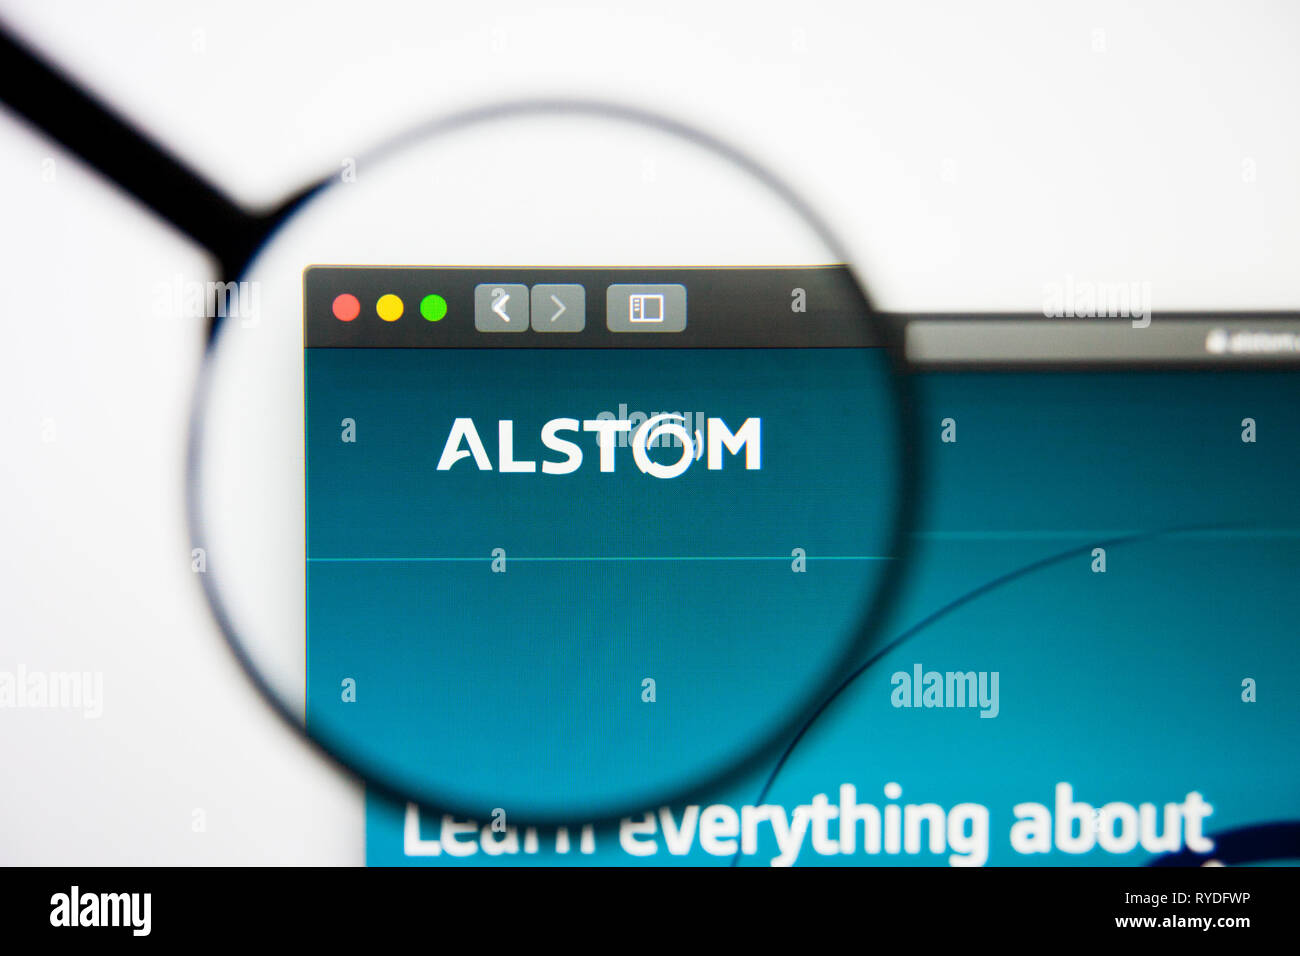 Los Angeles, Kalifornien, USA - 5. März 2019: Alstom Homepage. Alstom Logo sichtbar auf dem Display, Illustrative Editorial Stockfoto